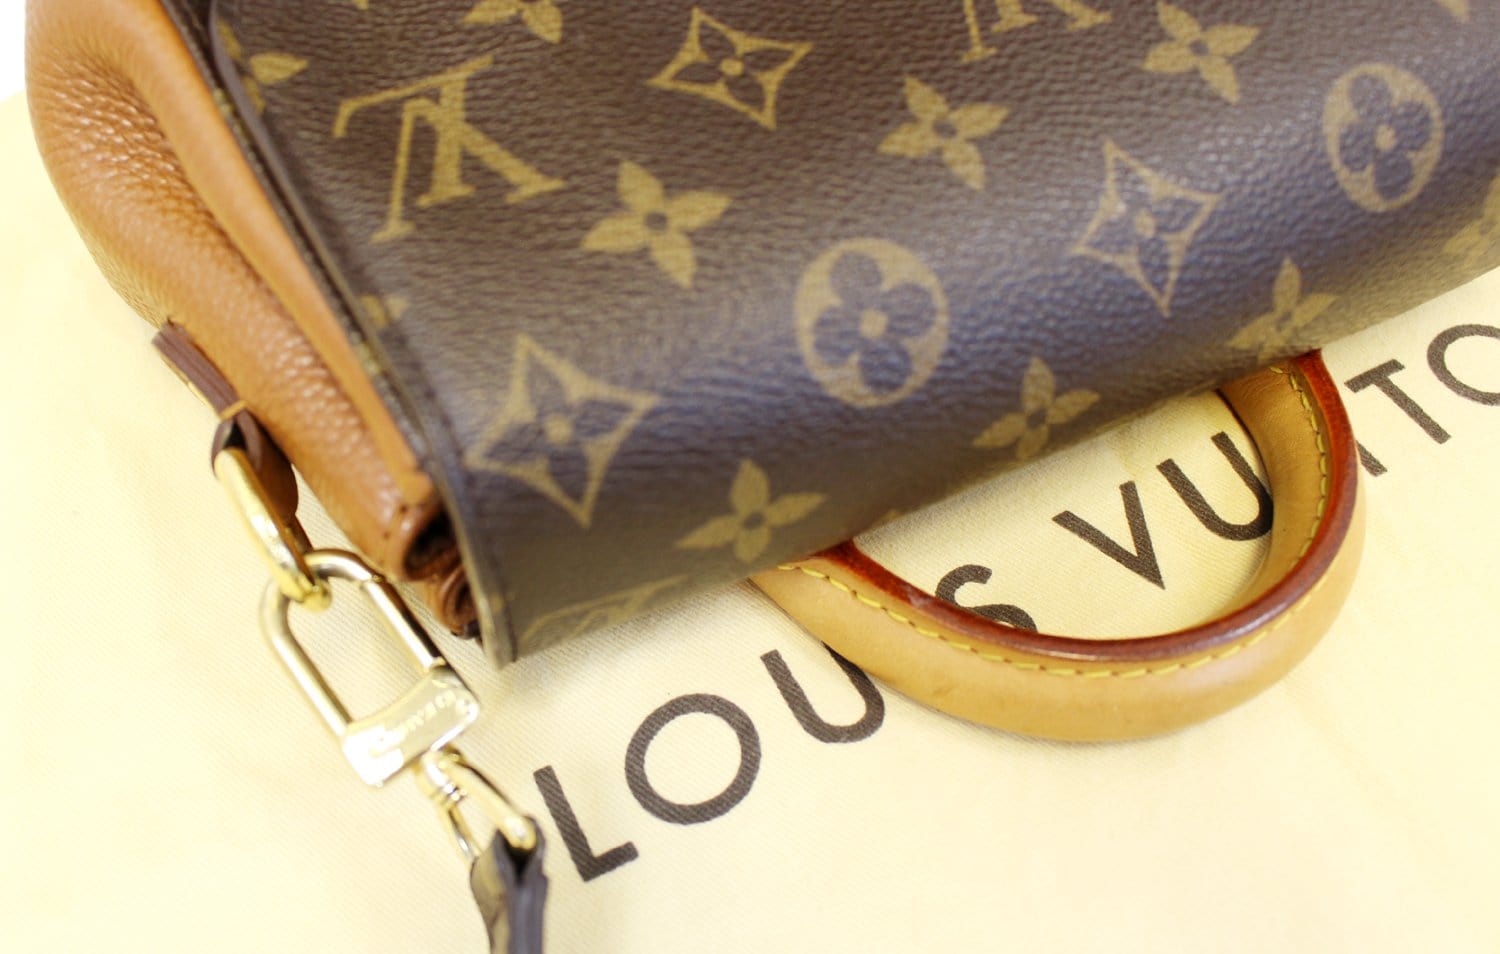 Lv Cute Bag Clearance, SAVE 57% 